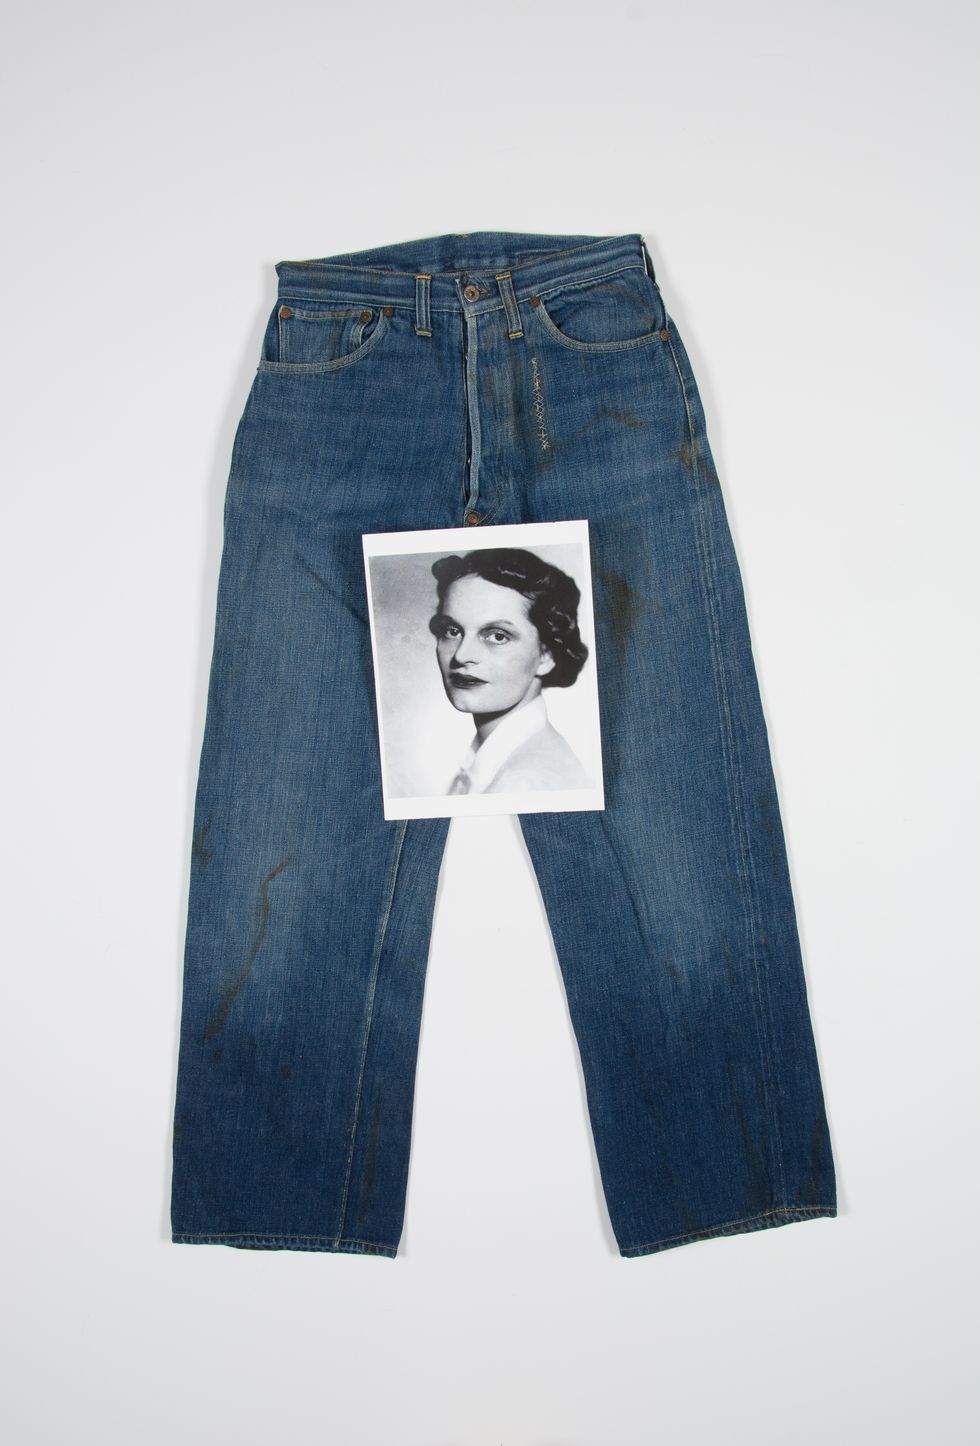 lot 401 women's jeans viola longacre early value version fabric patch 1930 1934 fresno